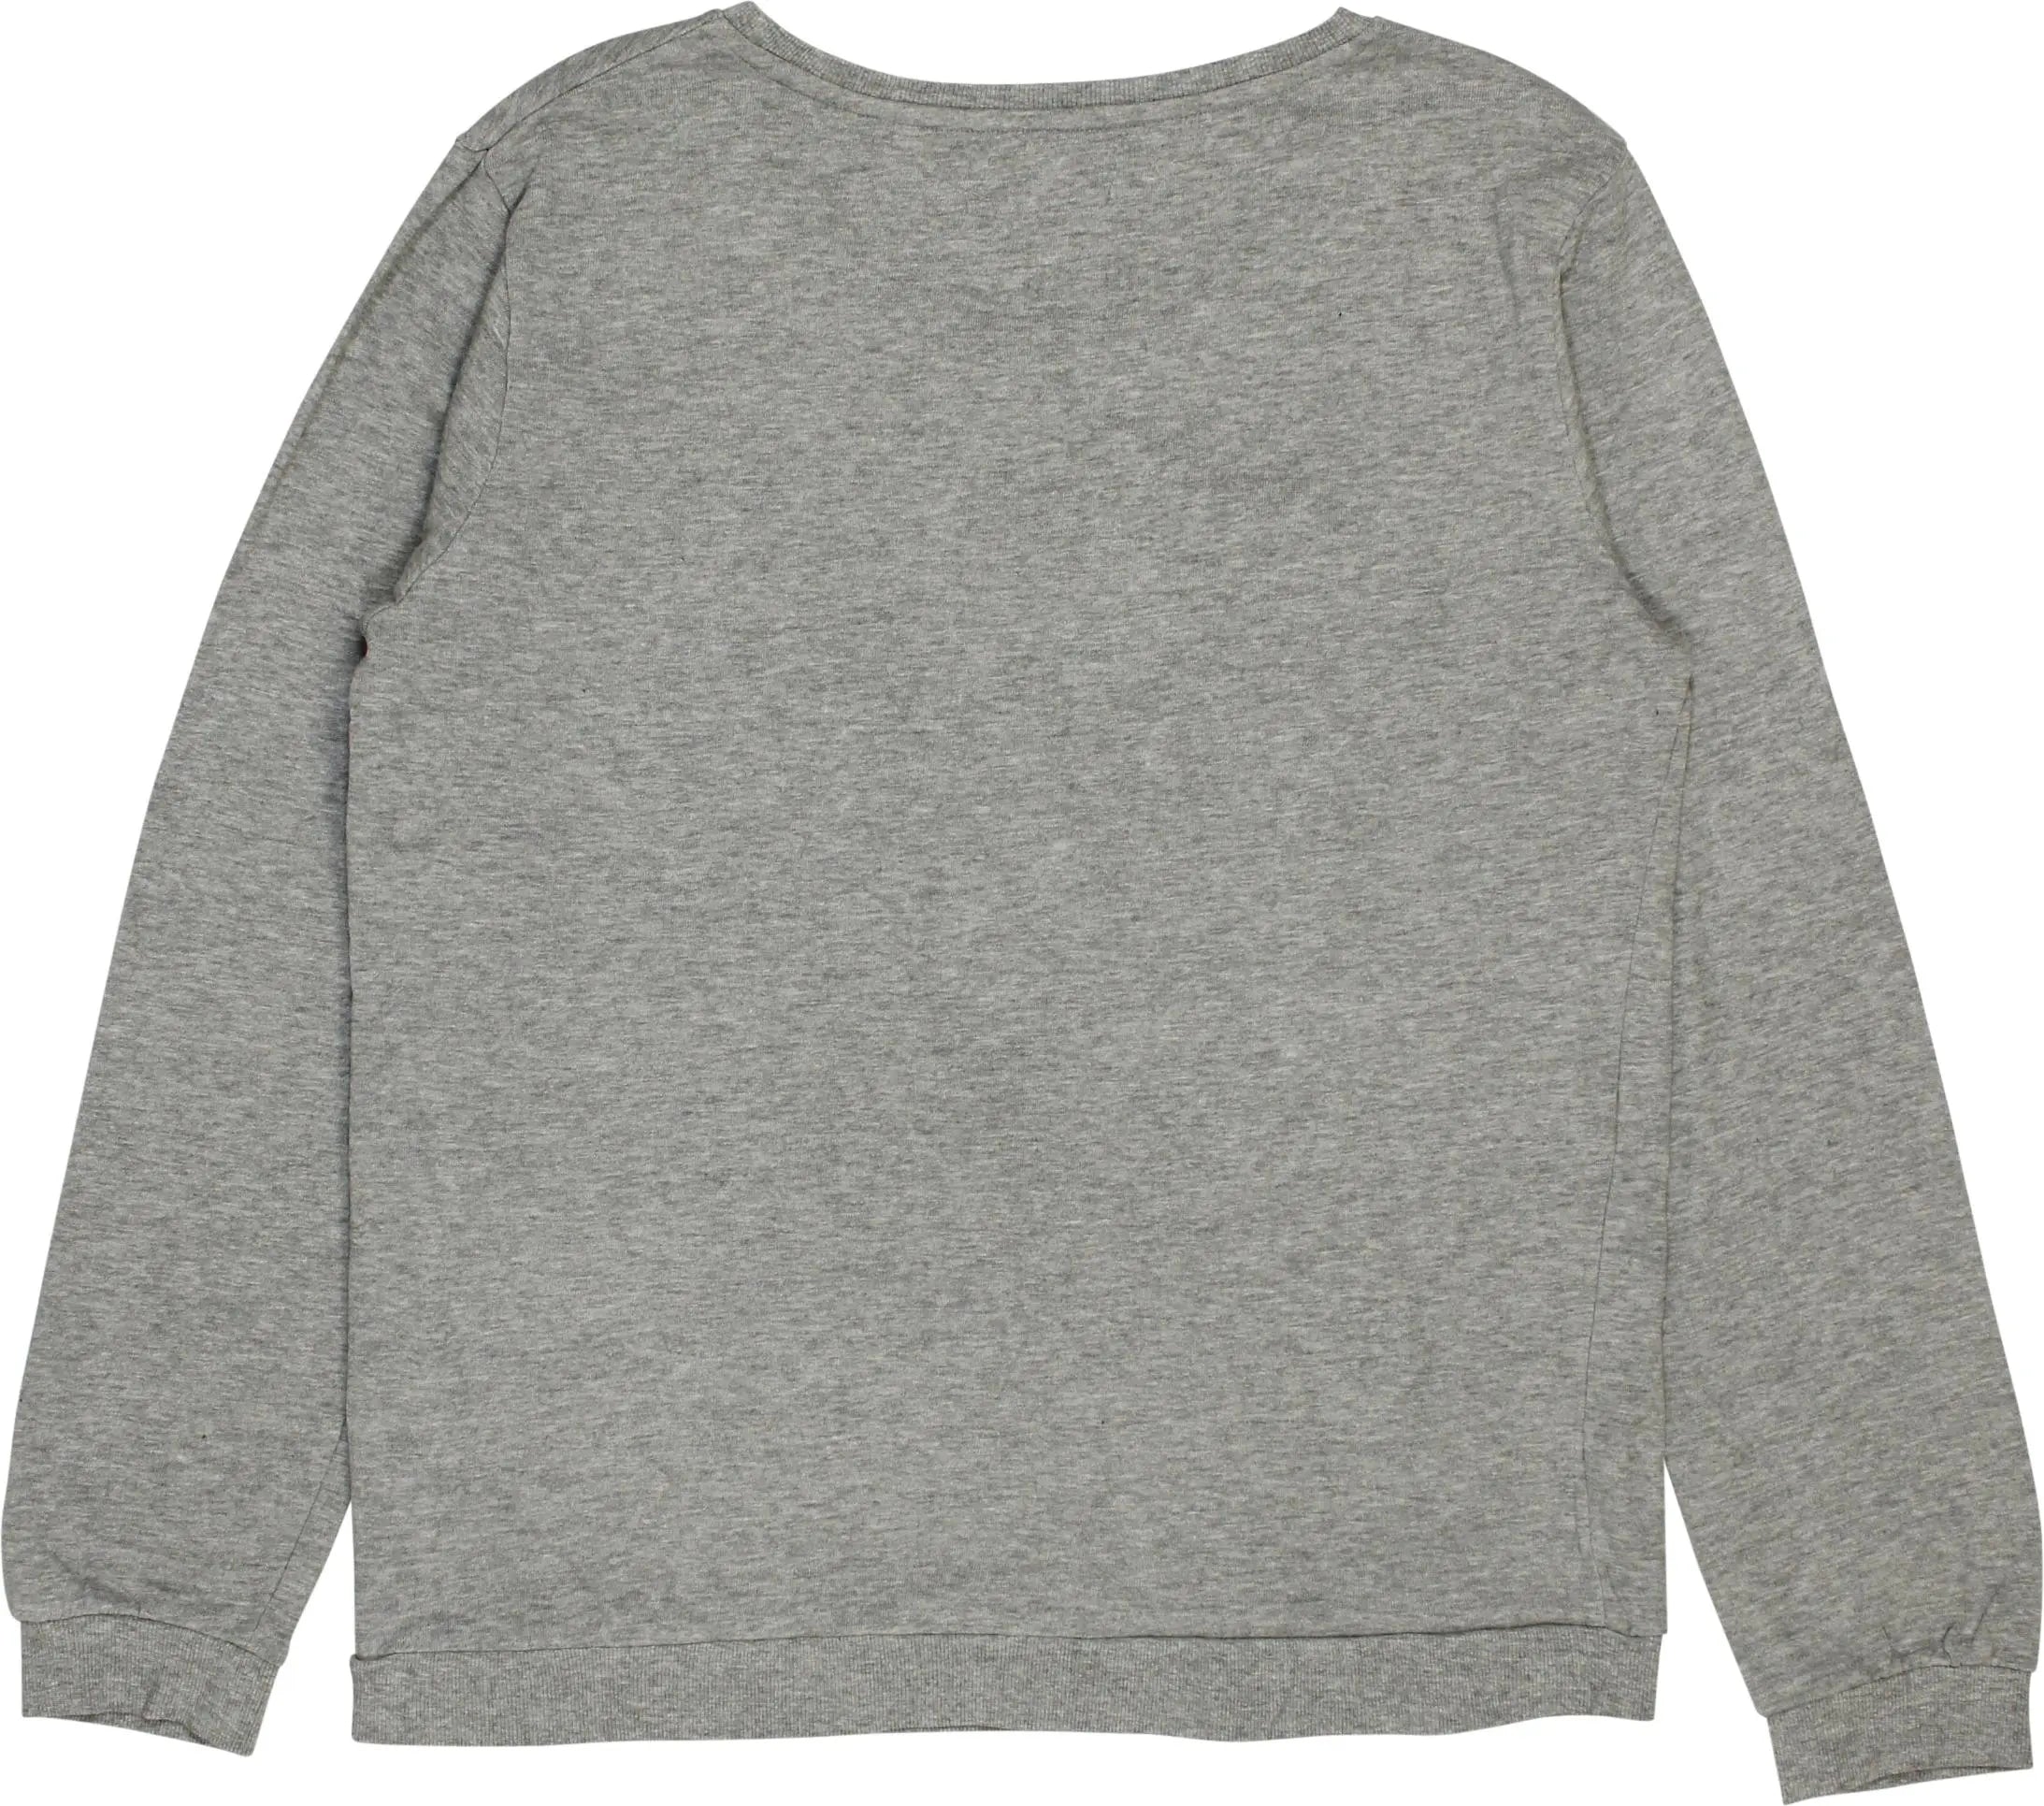 Esprit - Grey Sweatshirt- ThriftTale.com - Vintage and second handclothing